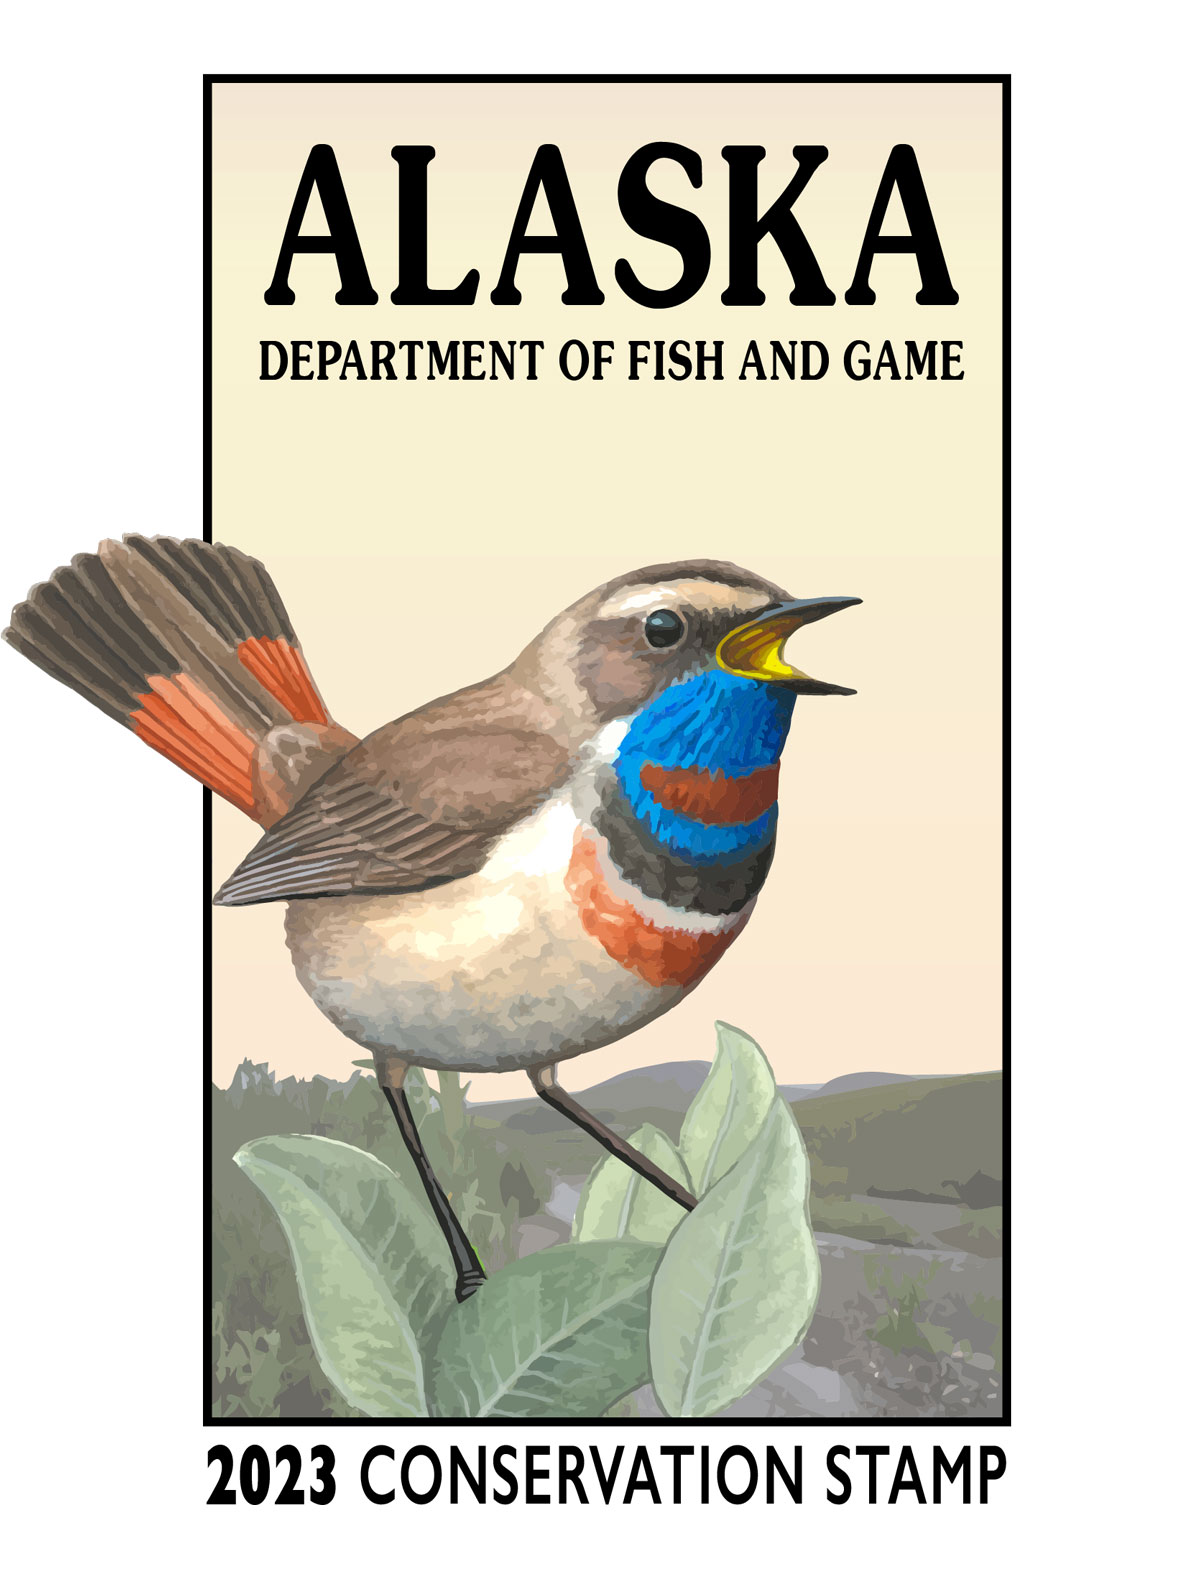 Alaska Department of Fish and Game Conservation Stamp - Alaska Department of Fish and Game (ADFG)